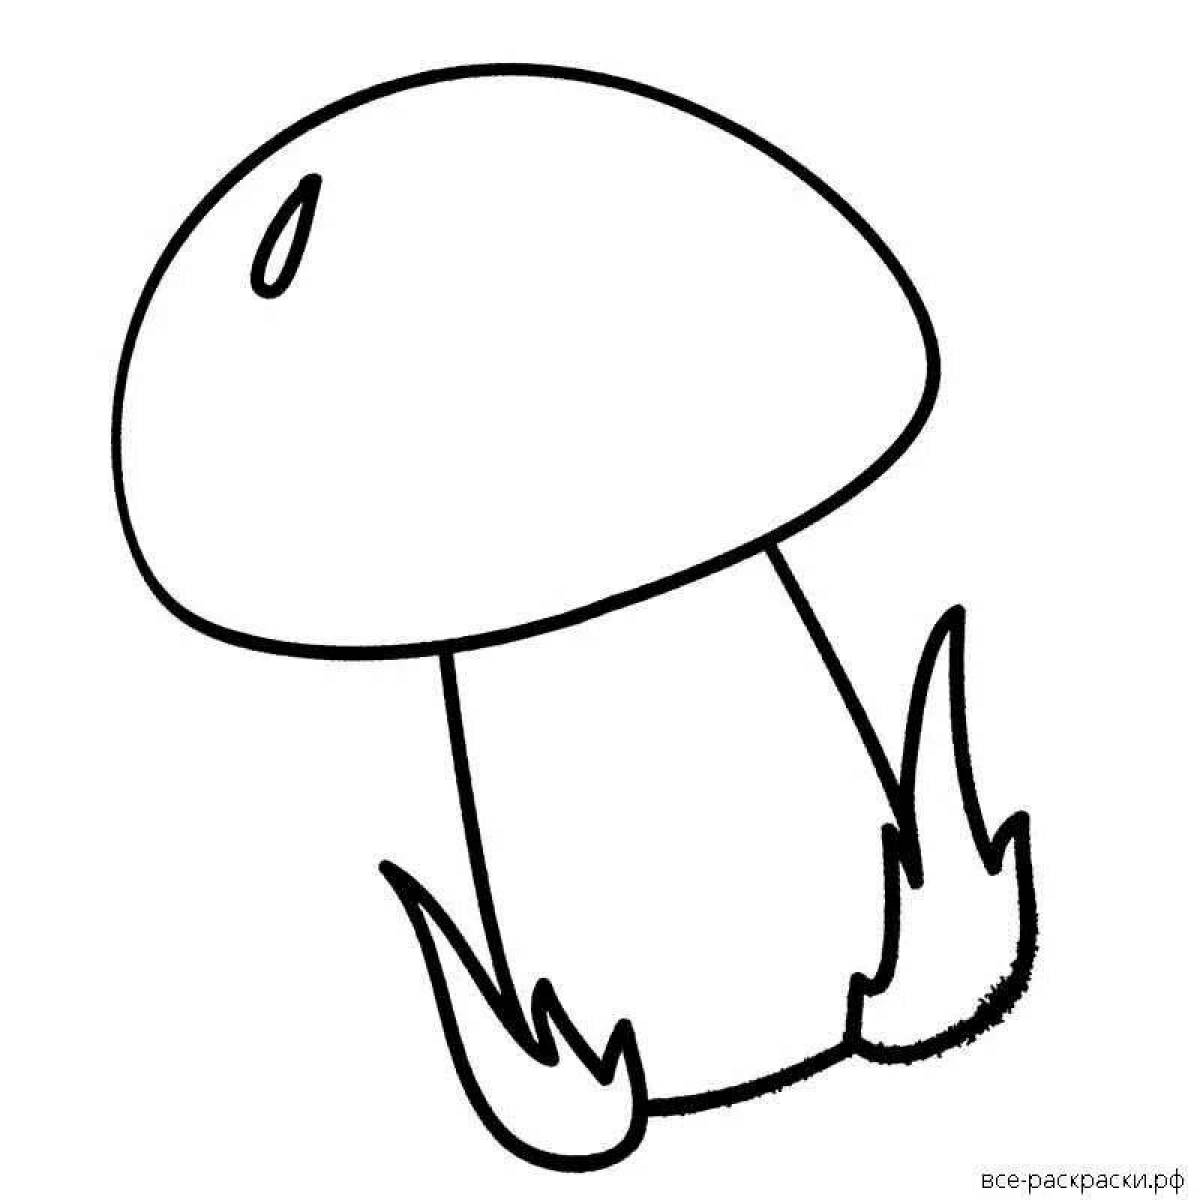 Colorful porcini mushroom coloring page